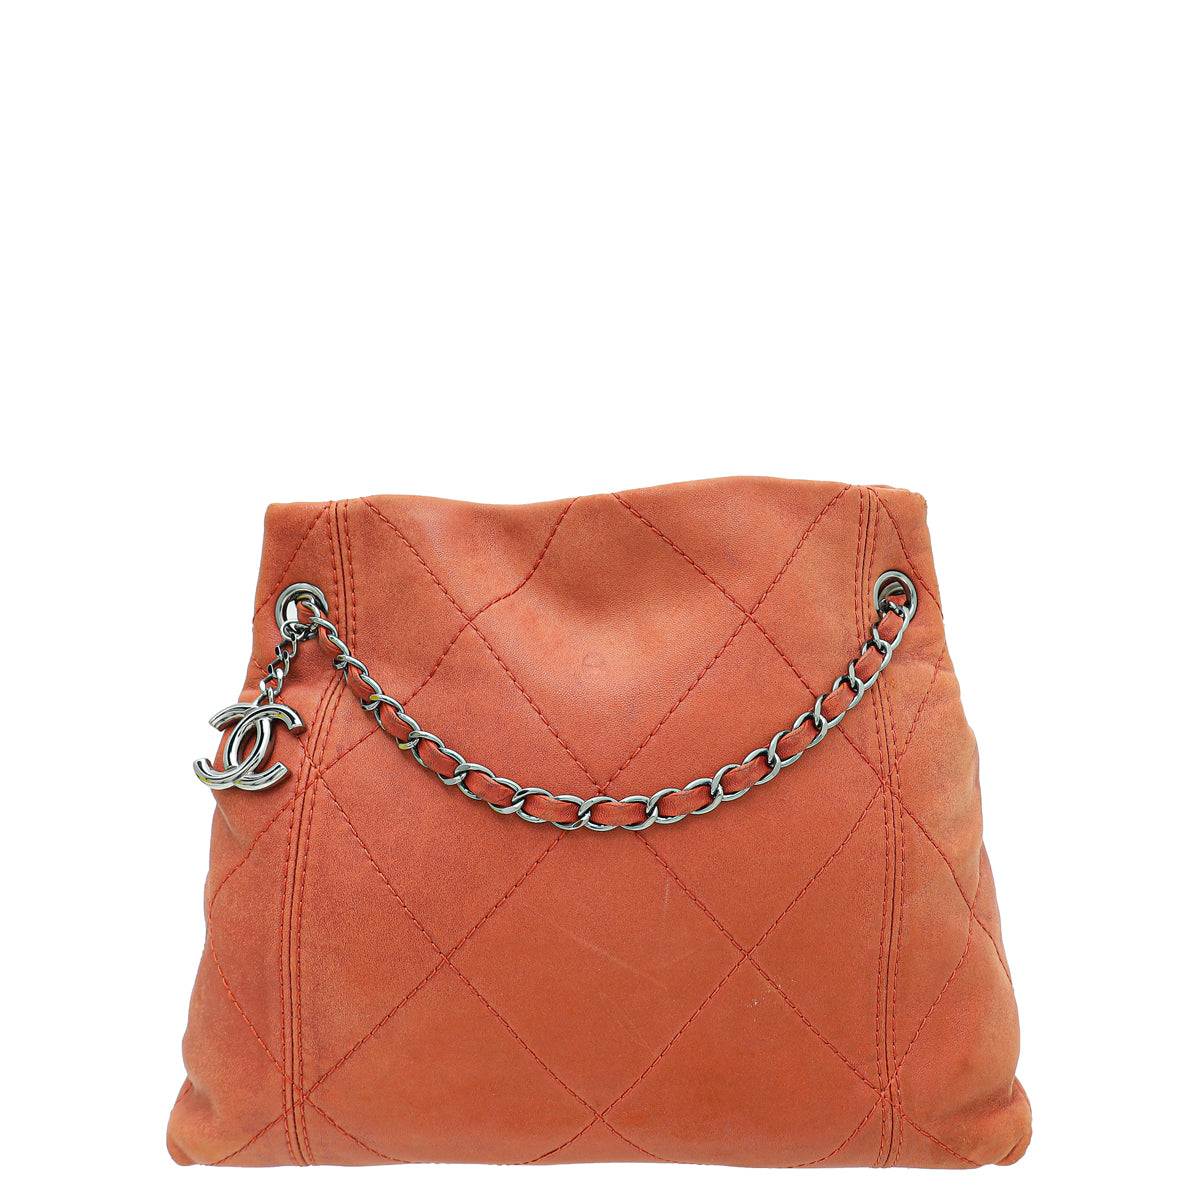 Chanel Rust Orange CC Soft Chain Tote Bag